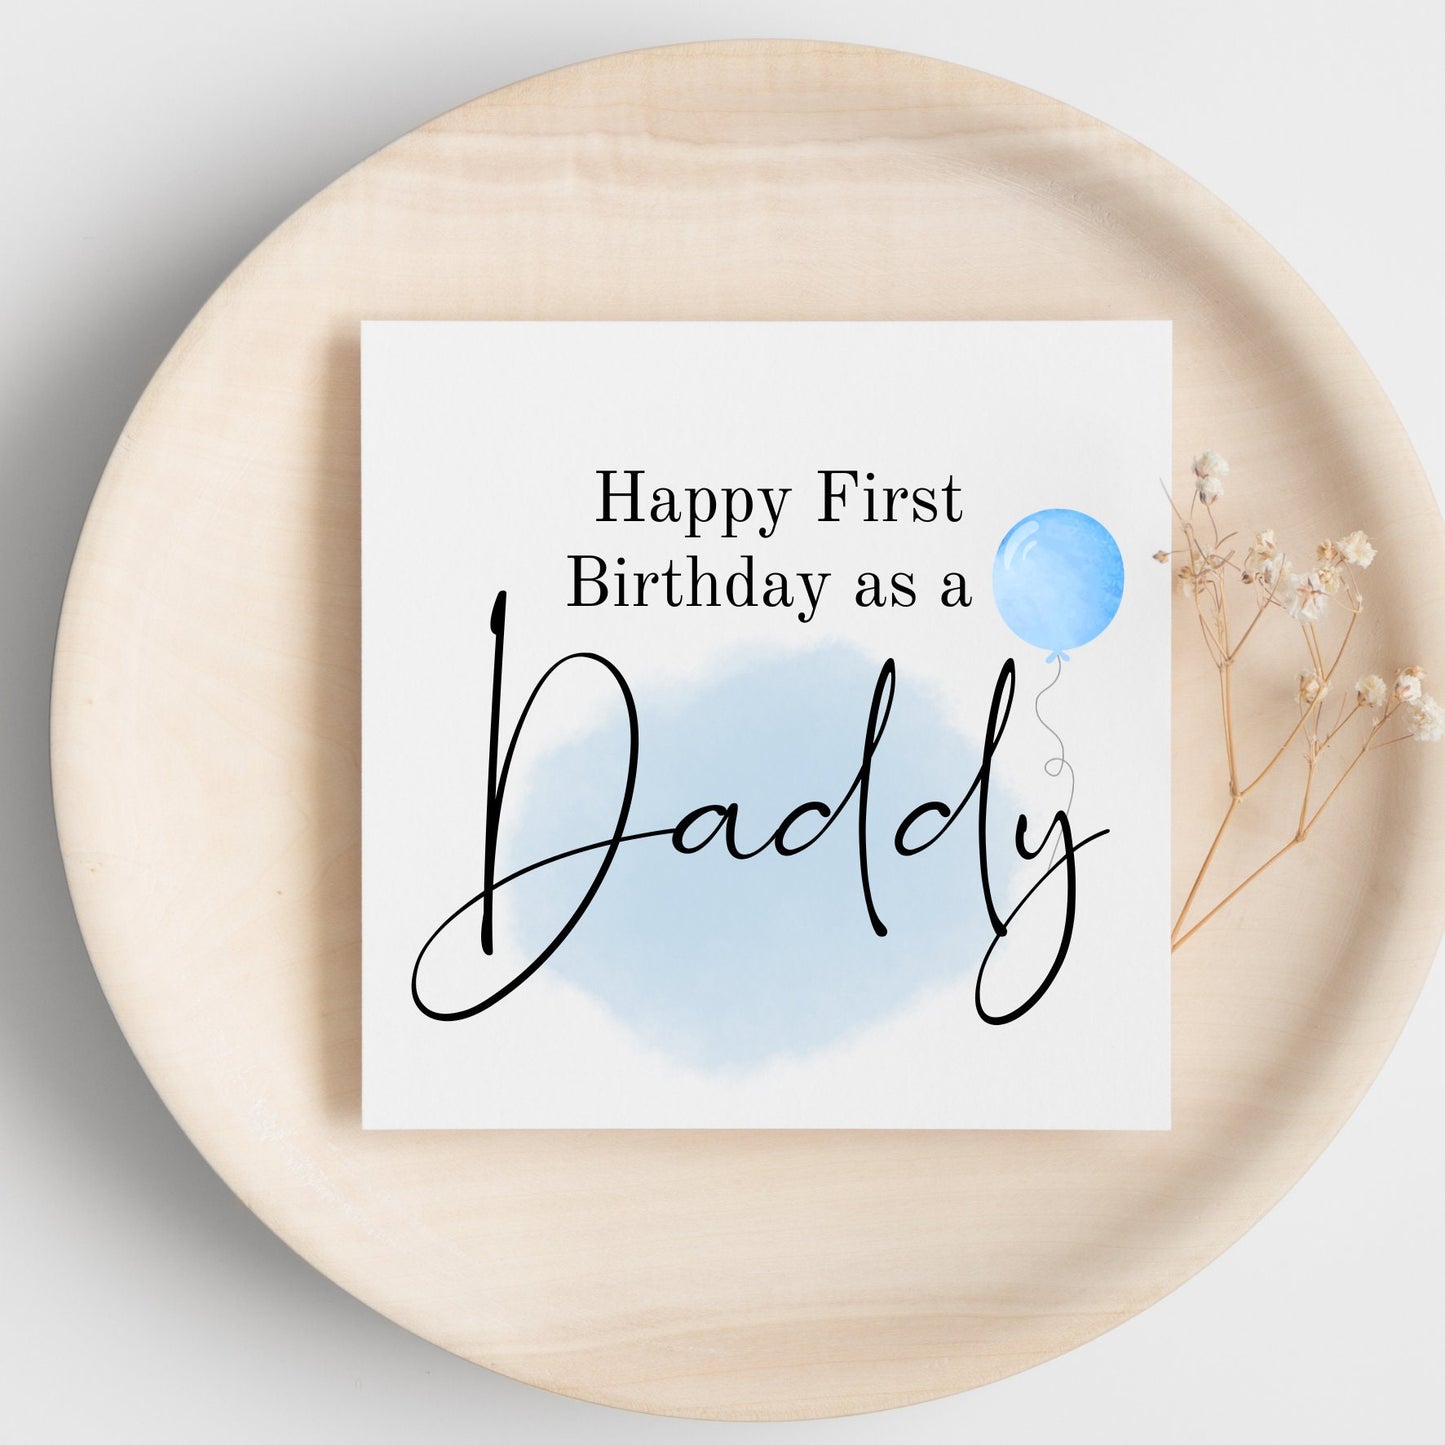 Happy first birthday as a daddy, new dad birthday, friend birthday, husband 1st bday as a daddy greeting card